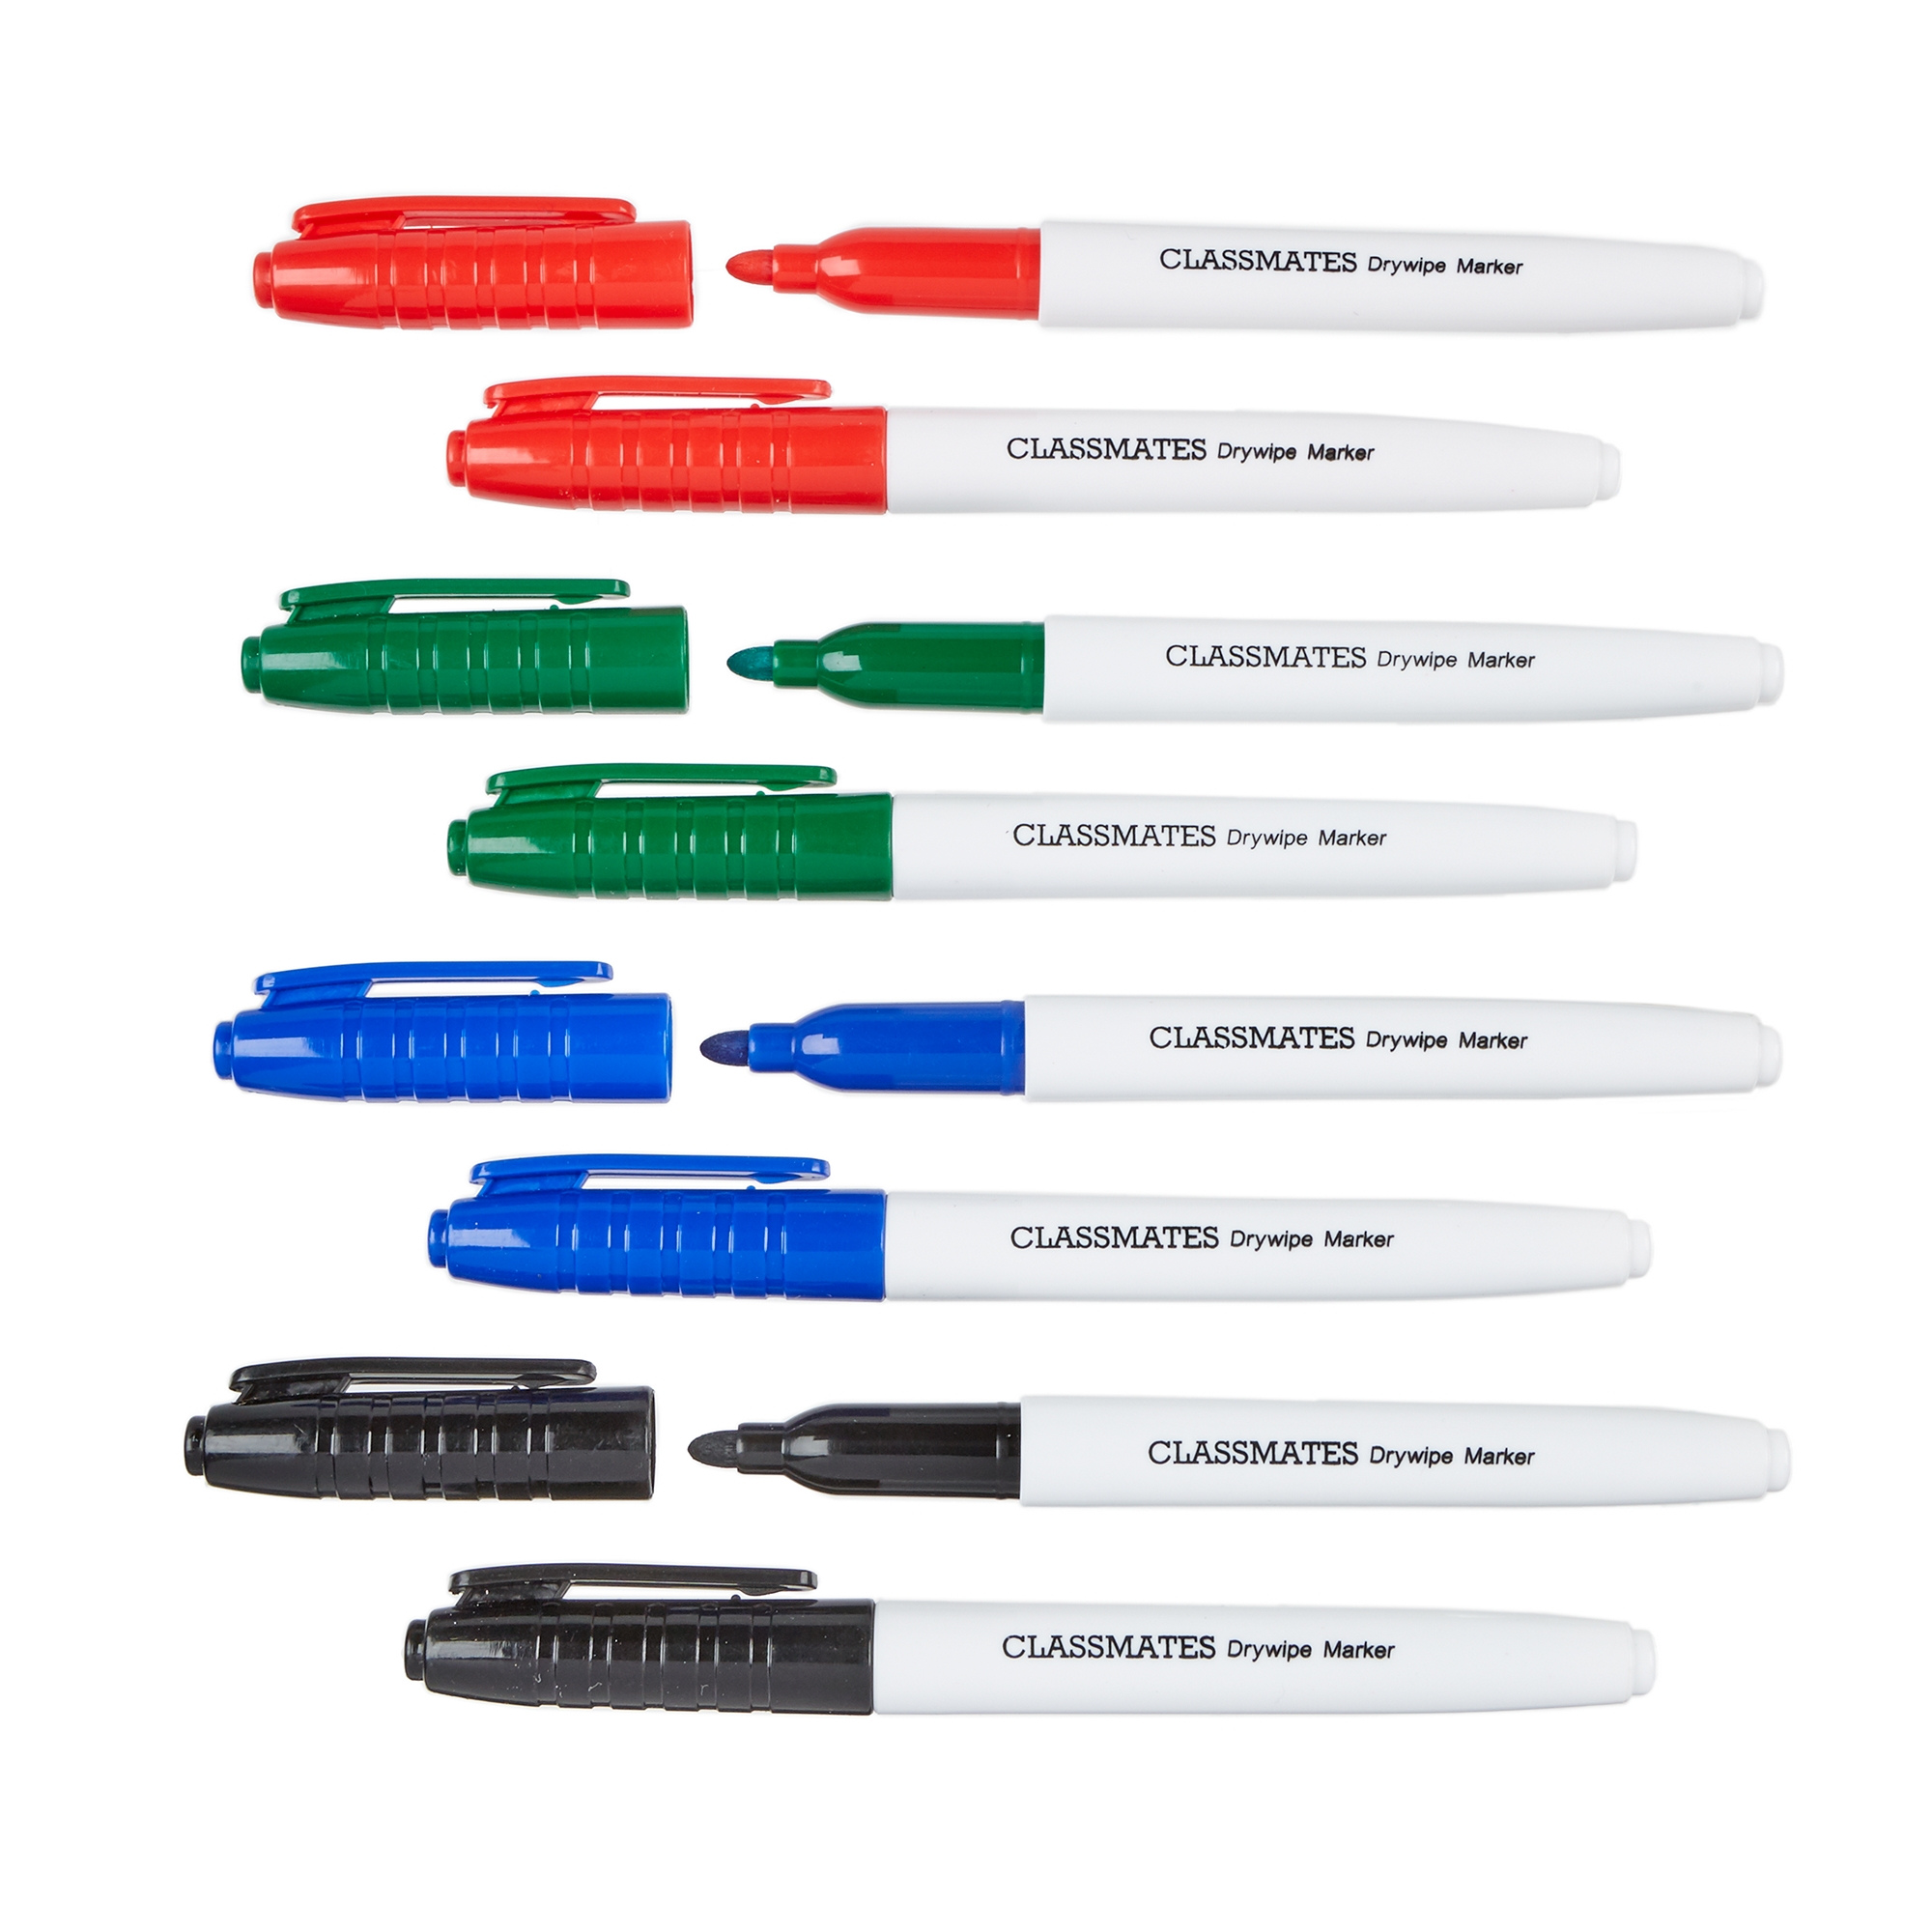 Classmates Dry-wipe Marker Pens - Assorted